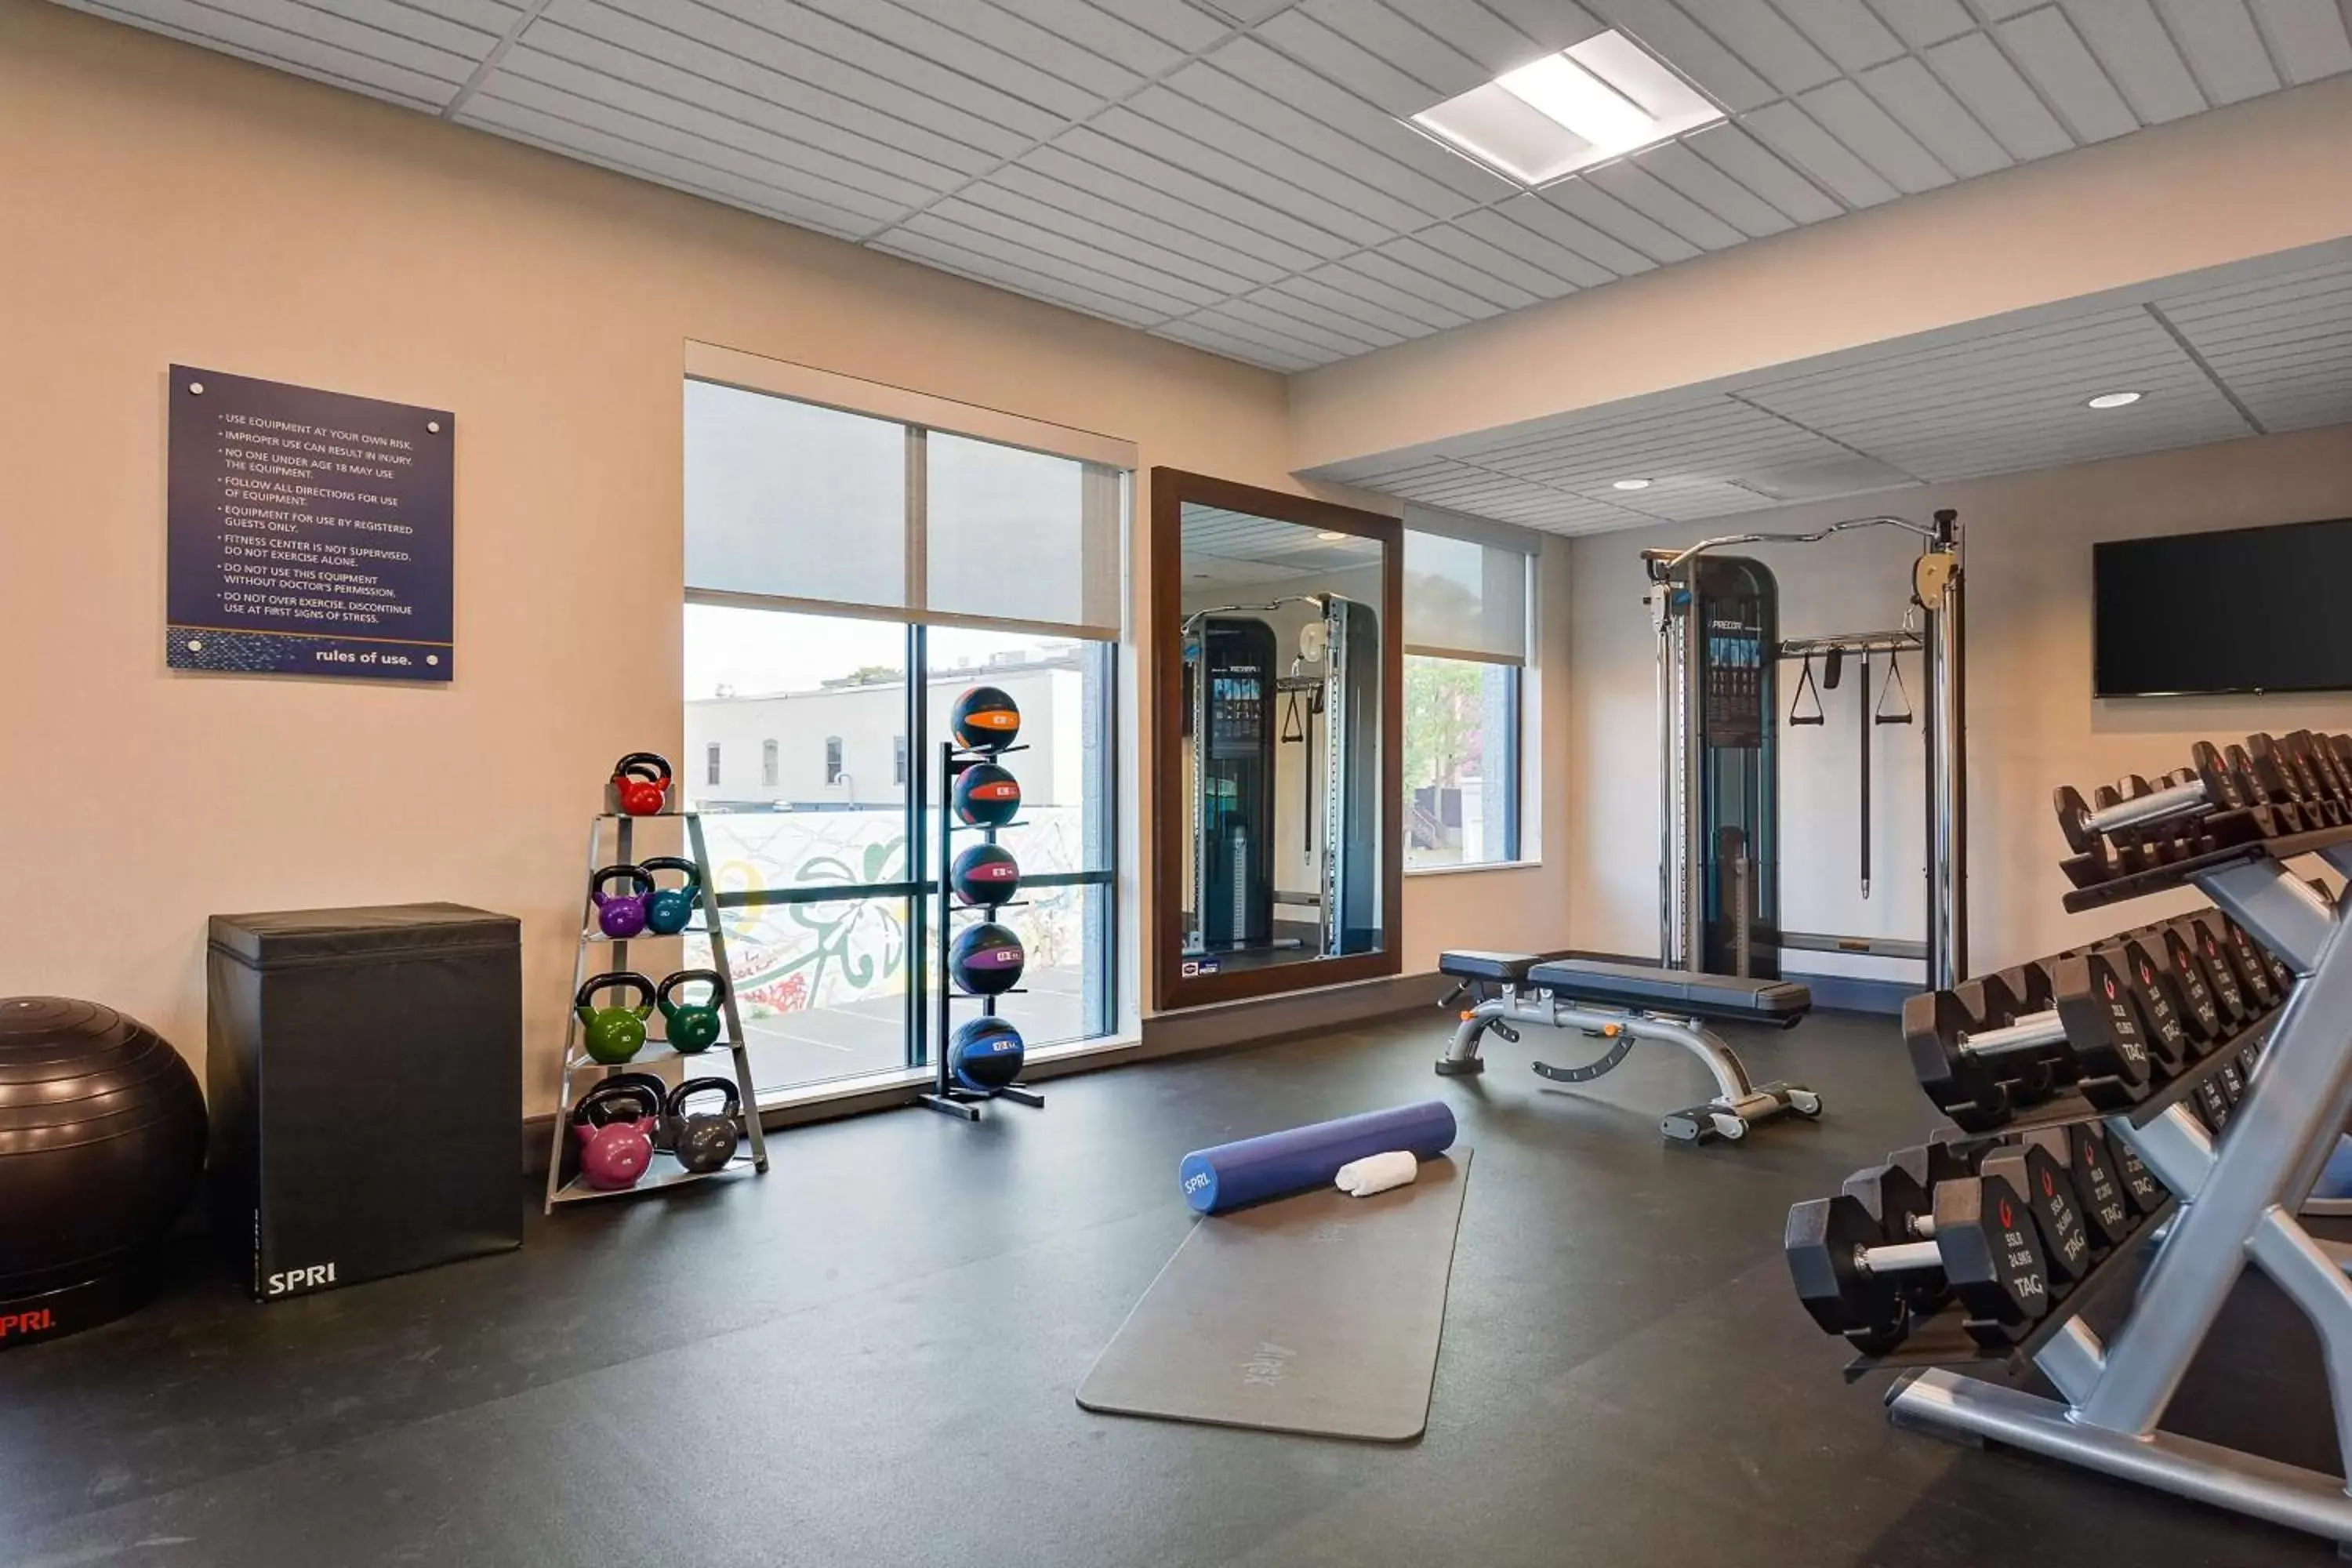 Fitness centre/facilities, Fitness Center/Facilities in Hampton Inn Salem, Ma